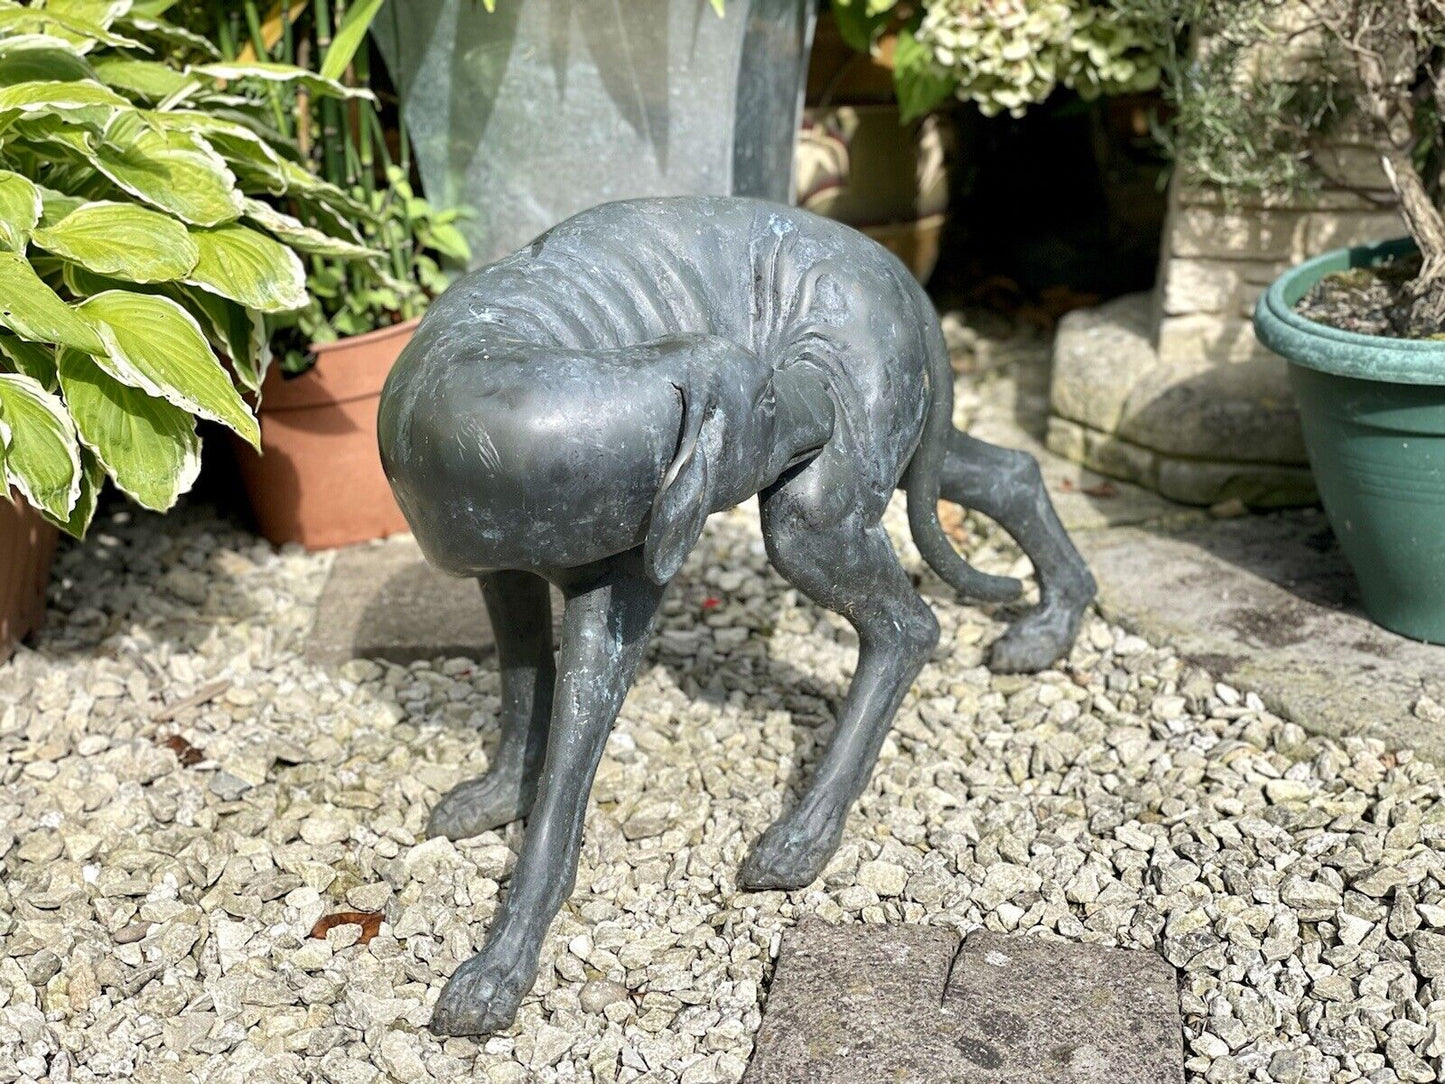 Bronzed Garden Statue of a Dog Nibbling its Rear Leg